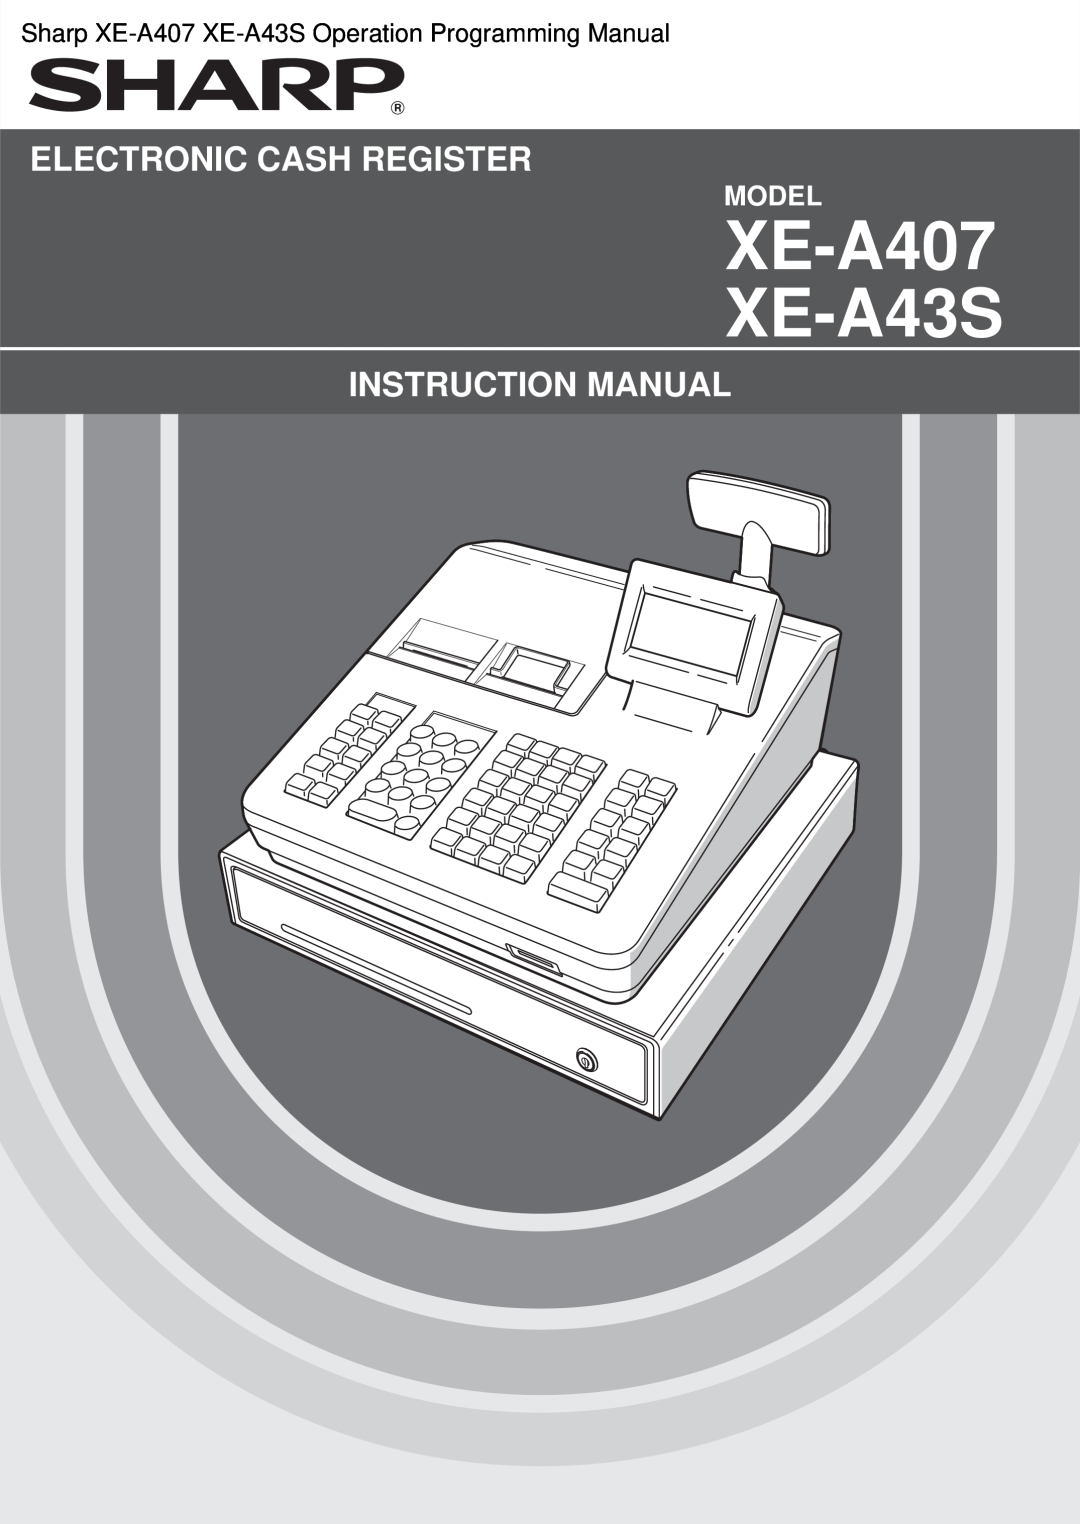 Sharp service manual Service Manual, XE-A207/A23S XE-A407/A43S, Electronic Cash Register, Model, CODE 00ZXEA407SM/E 